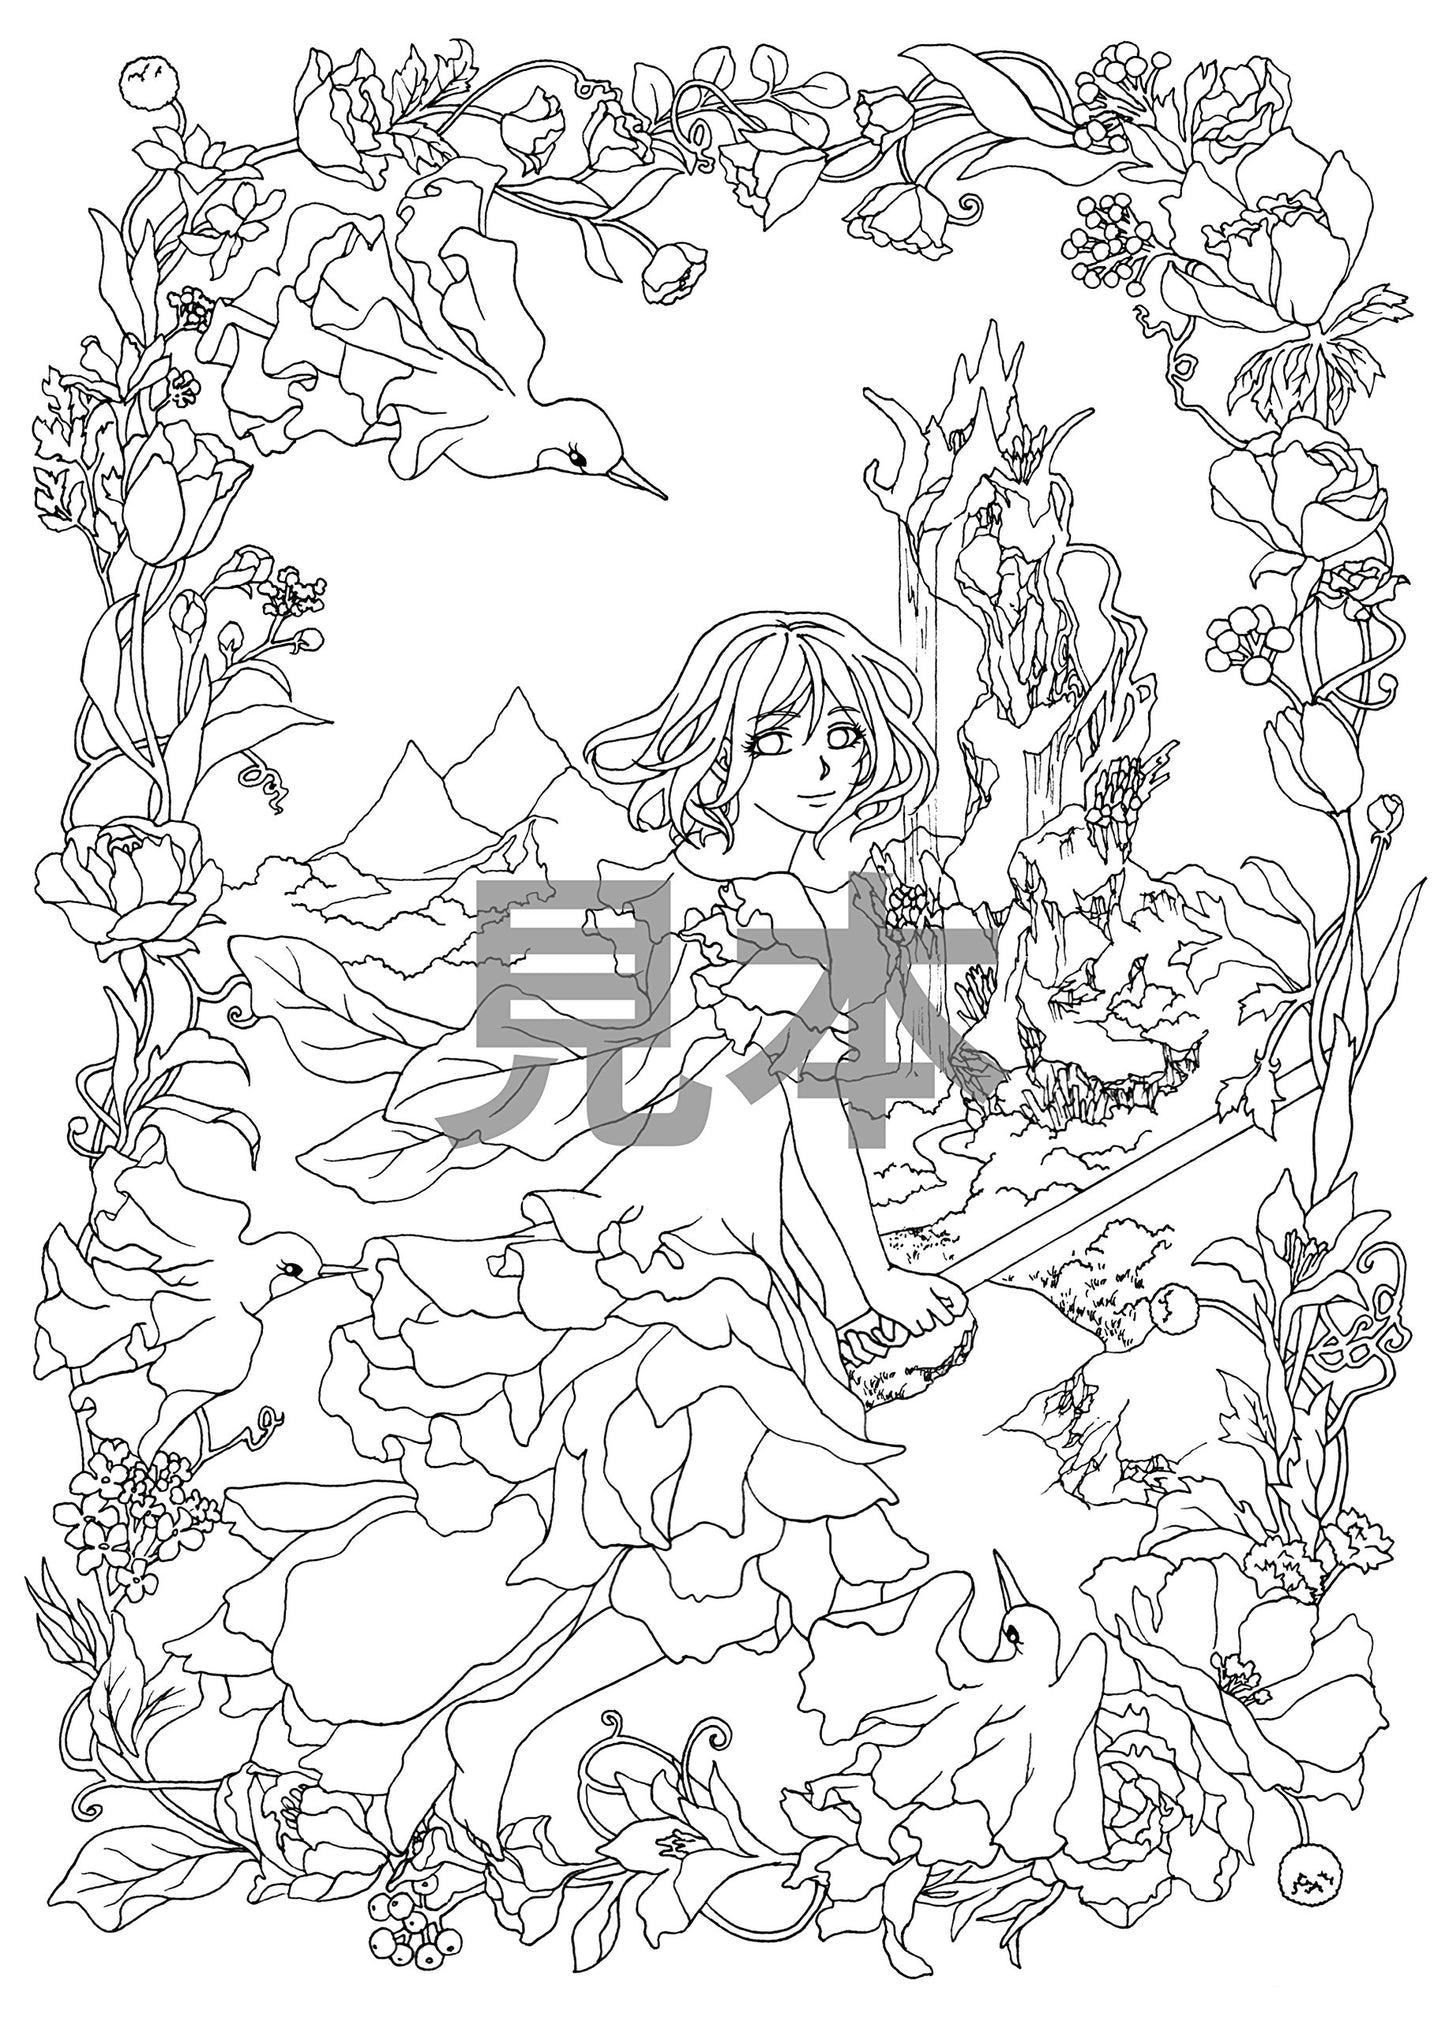 COAMARUJU Coloring Book by Kagari Takahashi